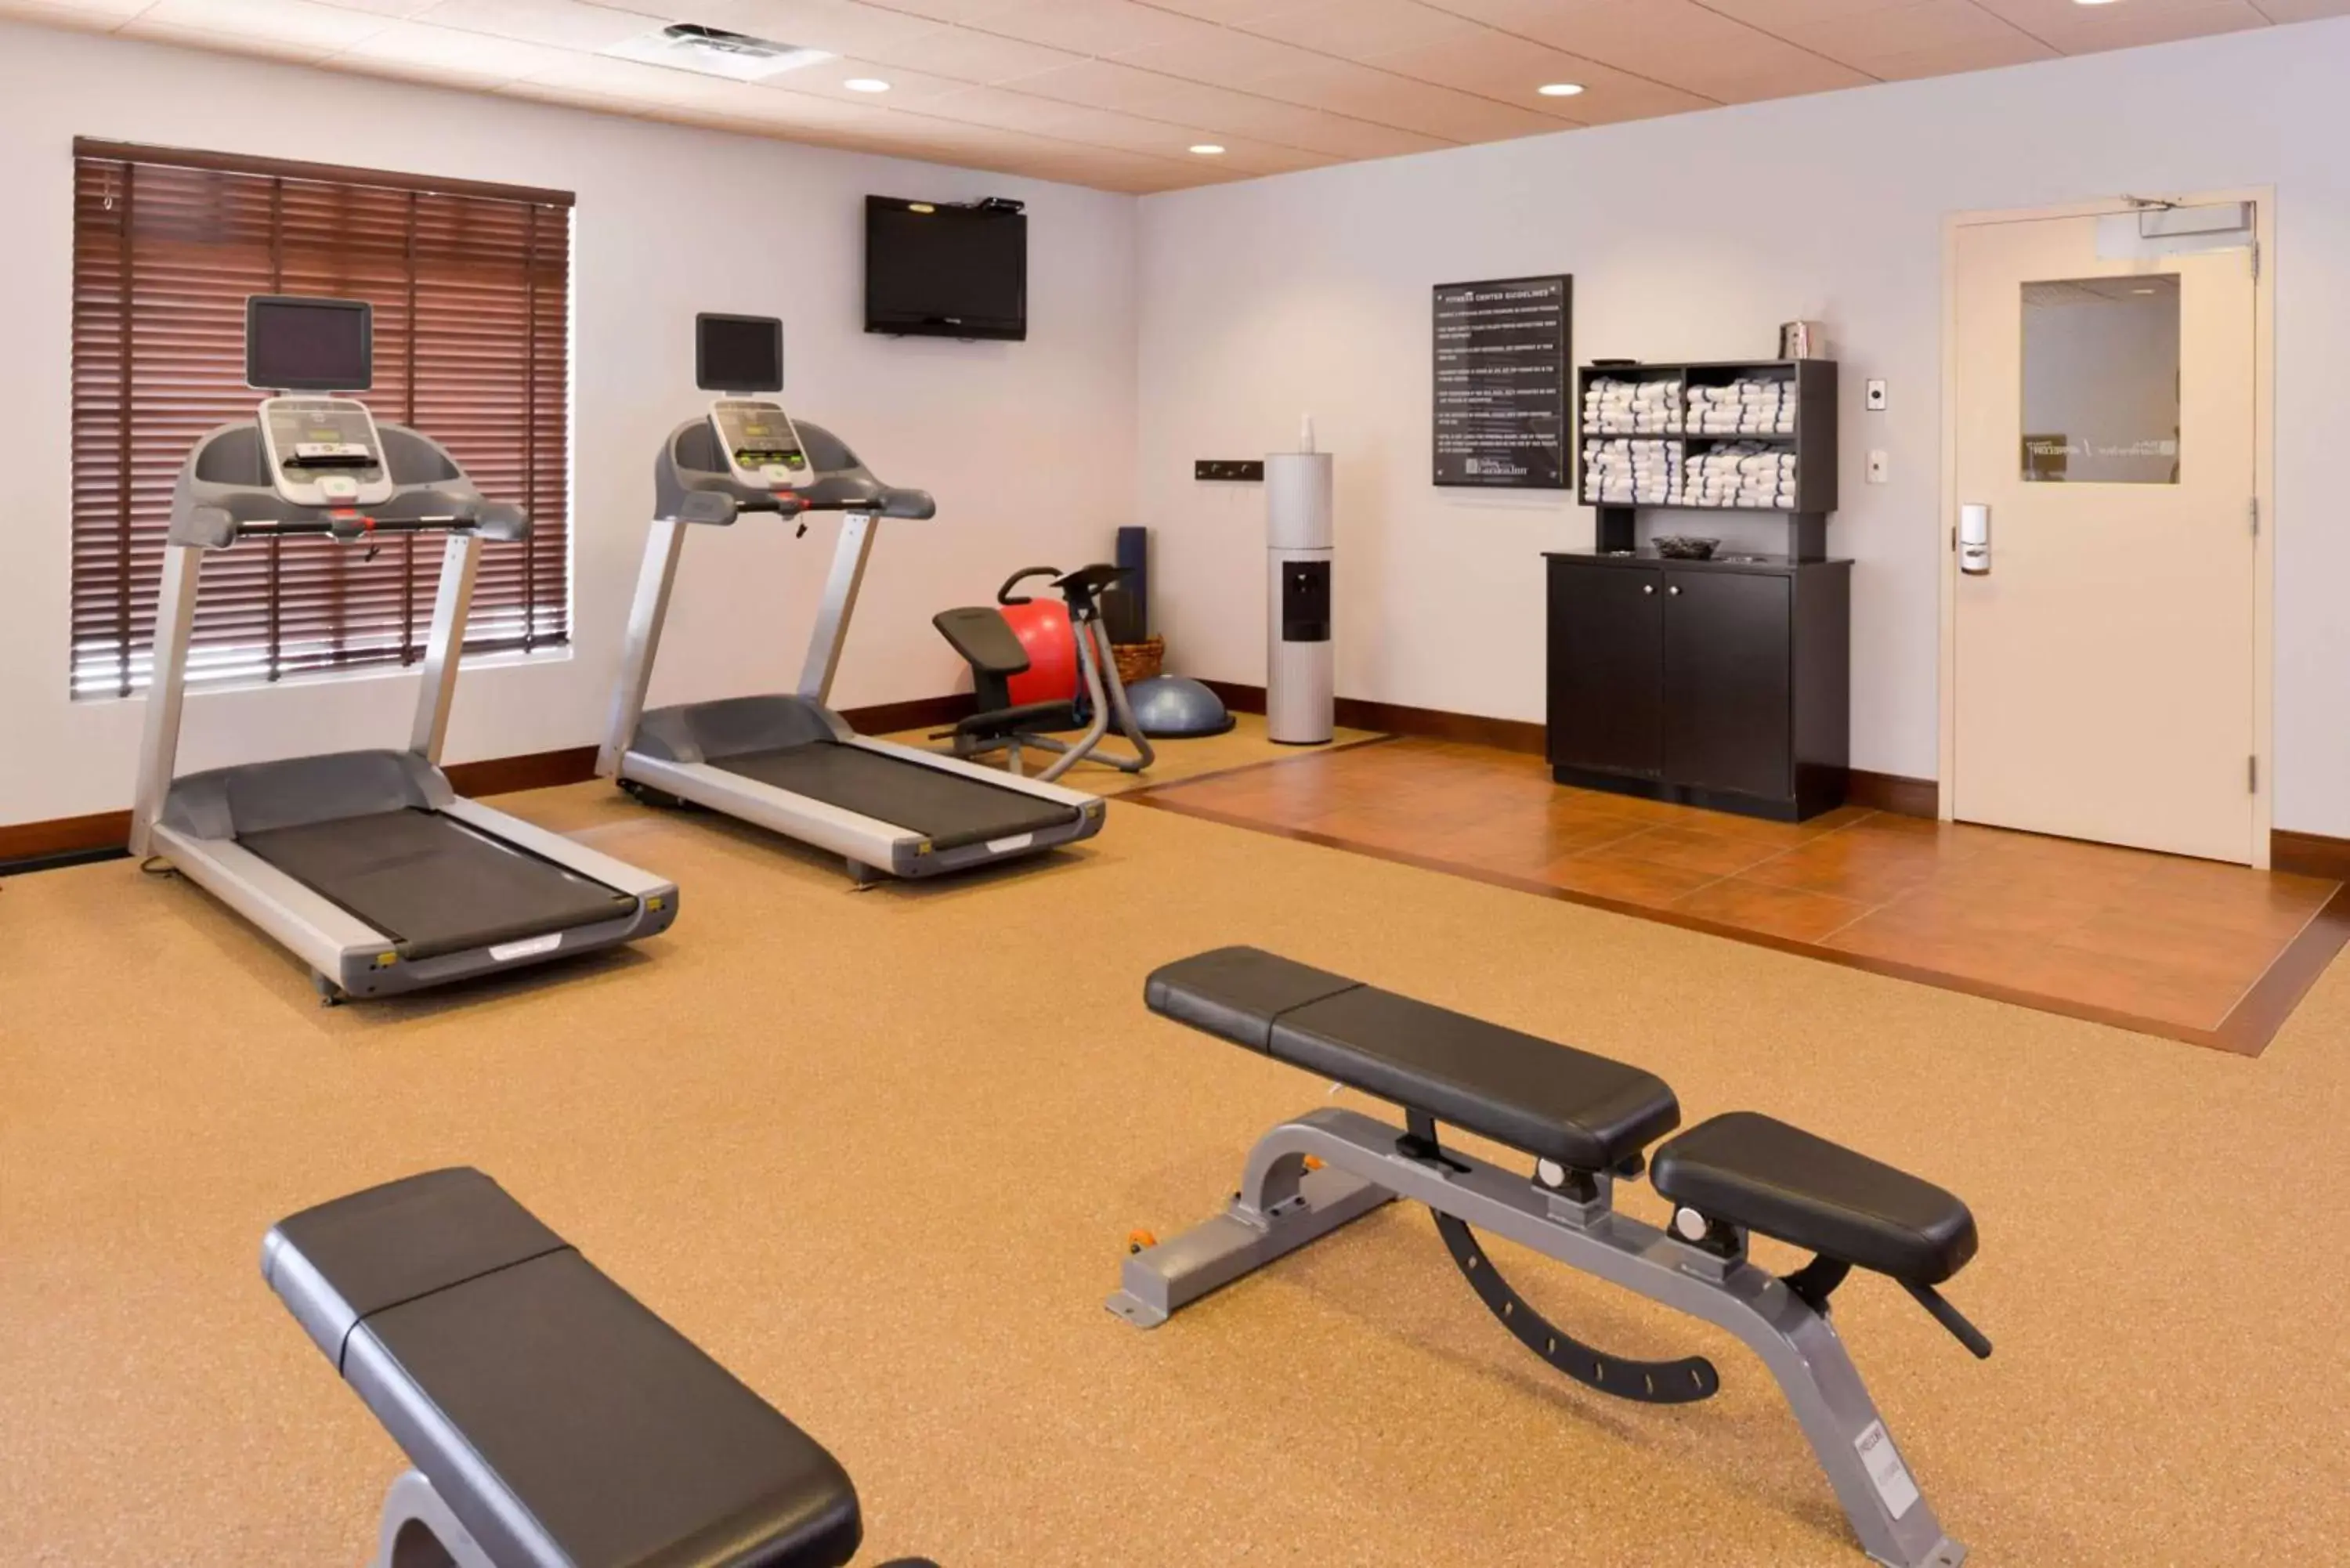 Fitness centre/facilities, Fitness Center/Facilities in Hilton Garden Inn Yuma Pivot Point